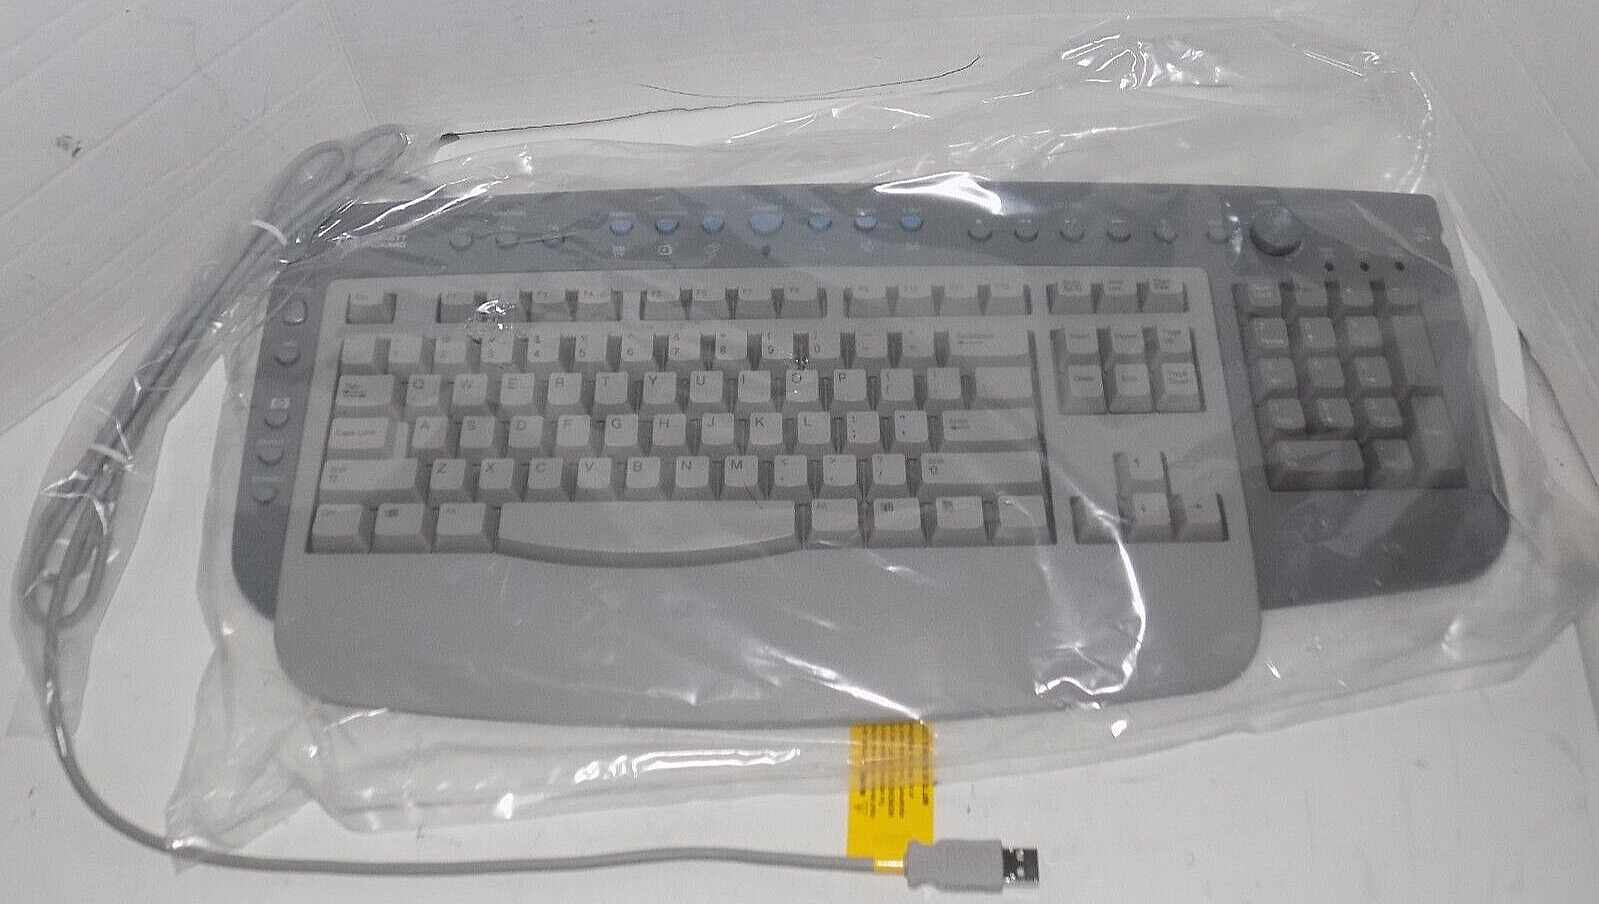 HP 6511-SU Multimedia USB Keyboard Retrograde PC Hardware 5183-9960